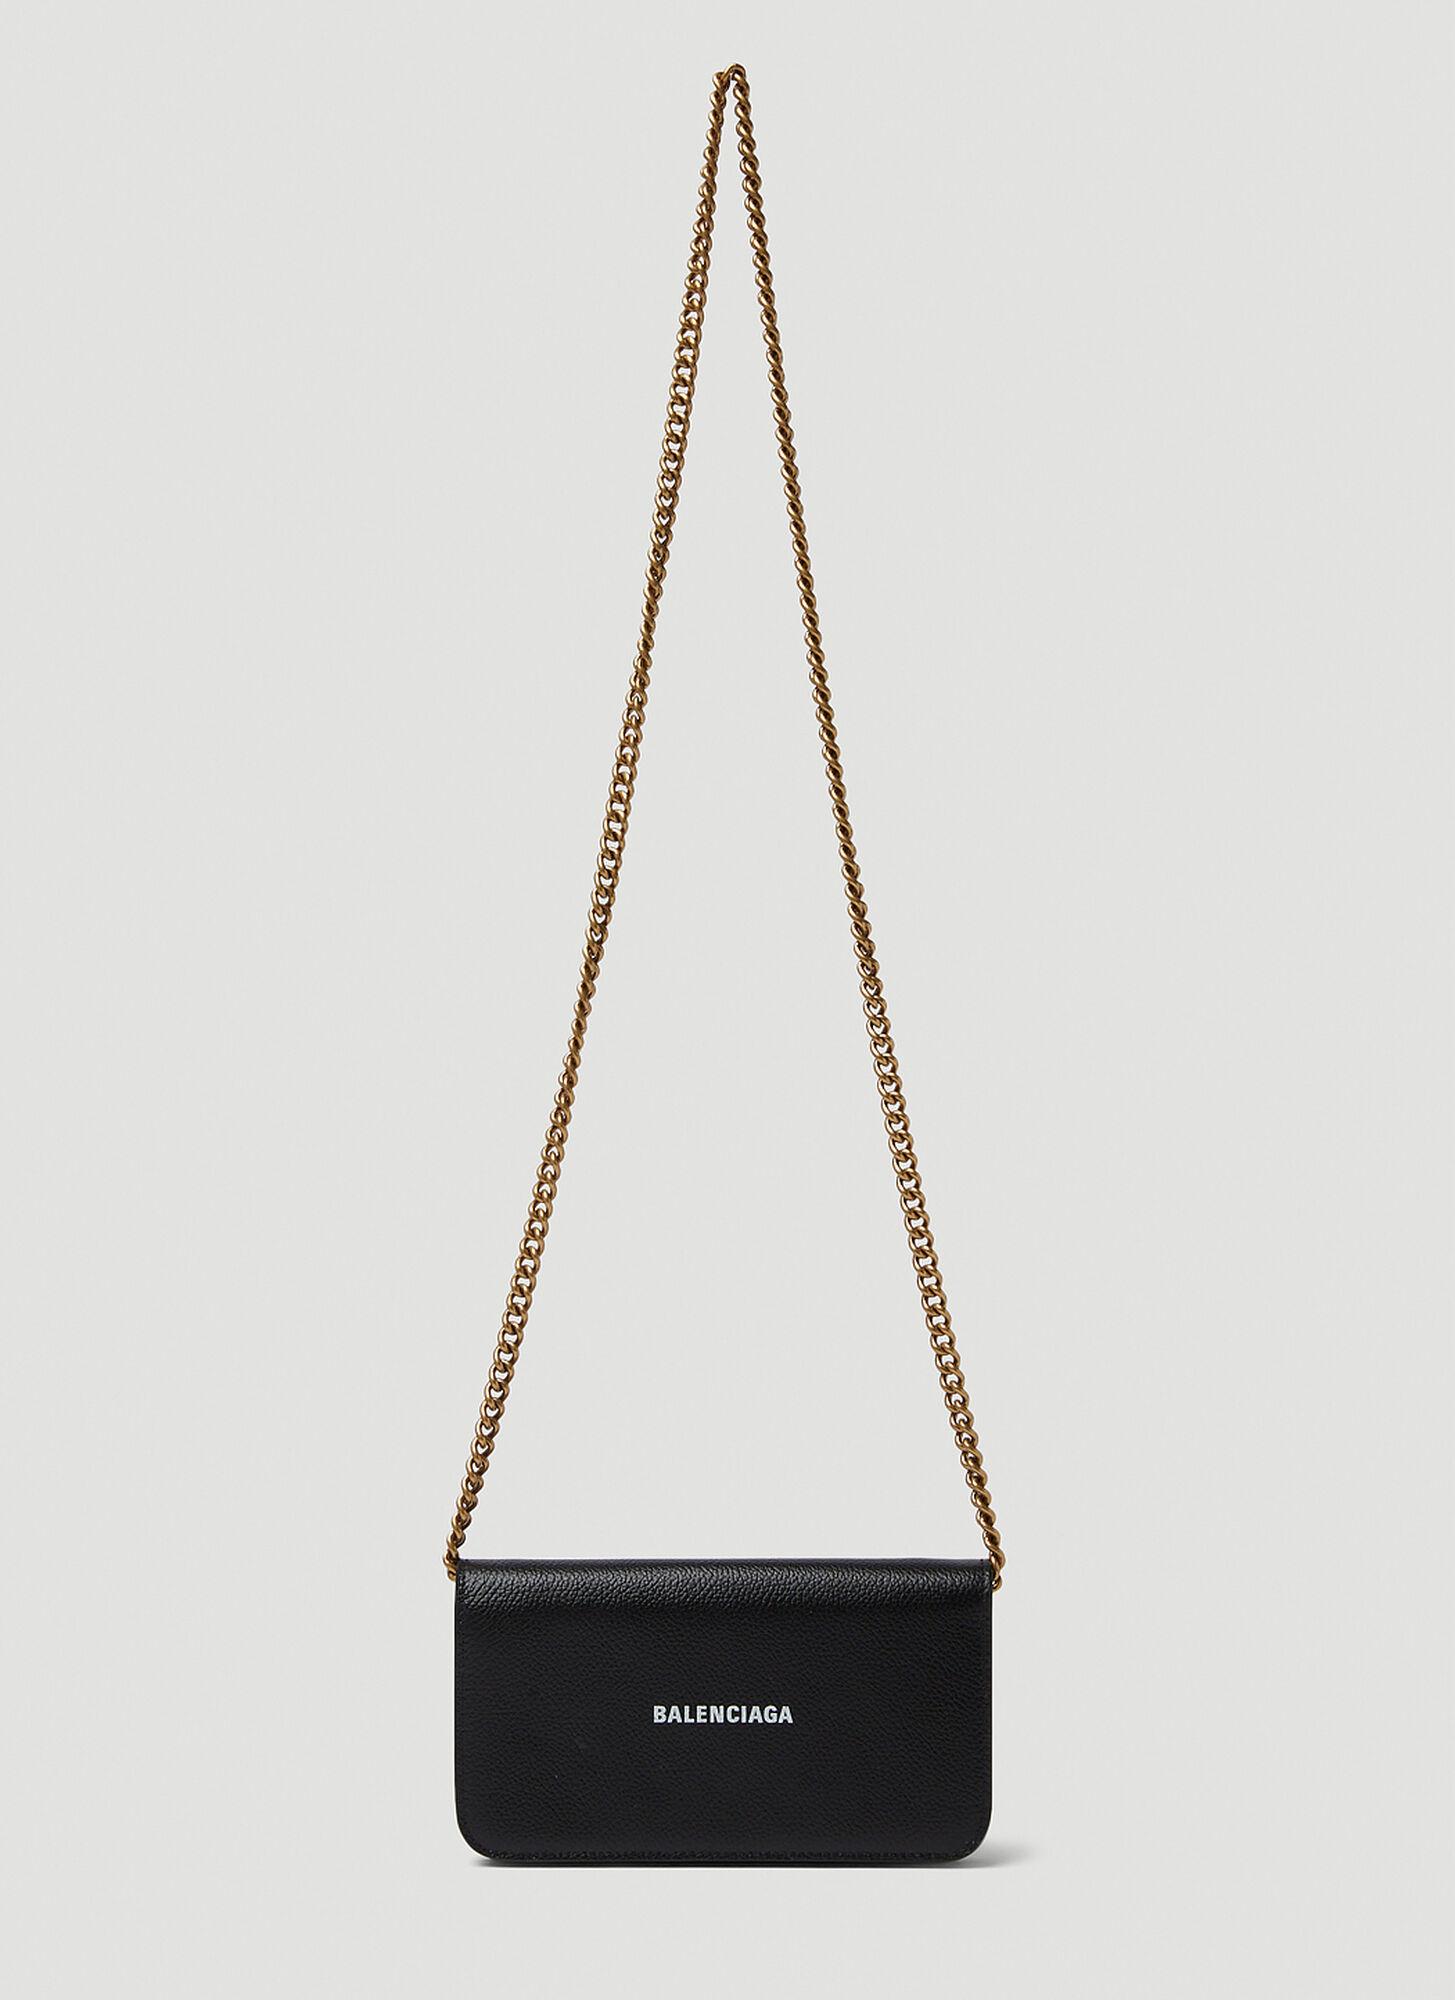 Balenciaga Leather Cash Phone Chain Wallet in Black | Lyst